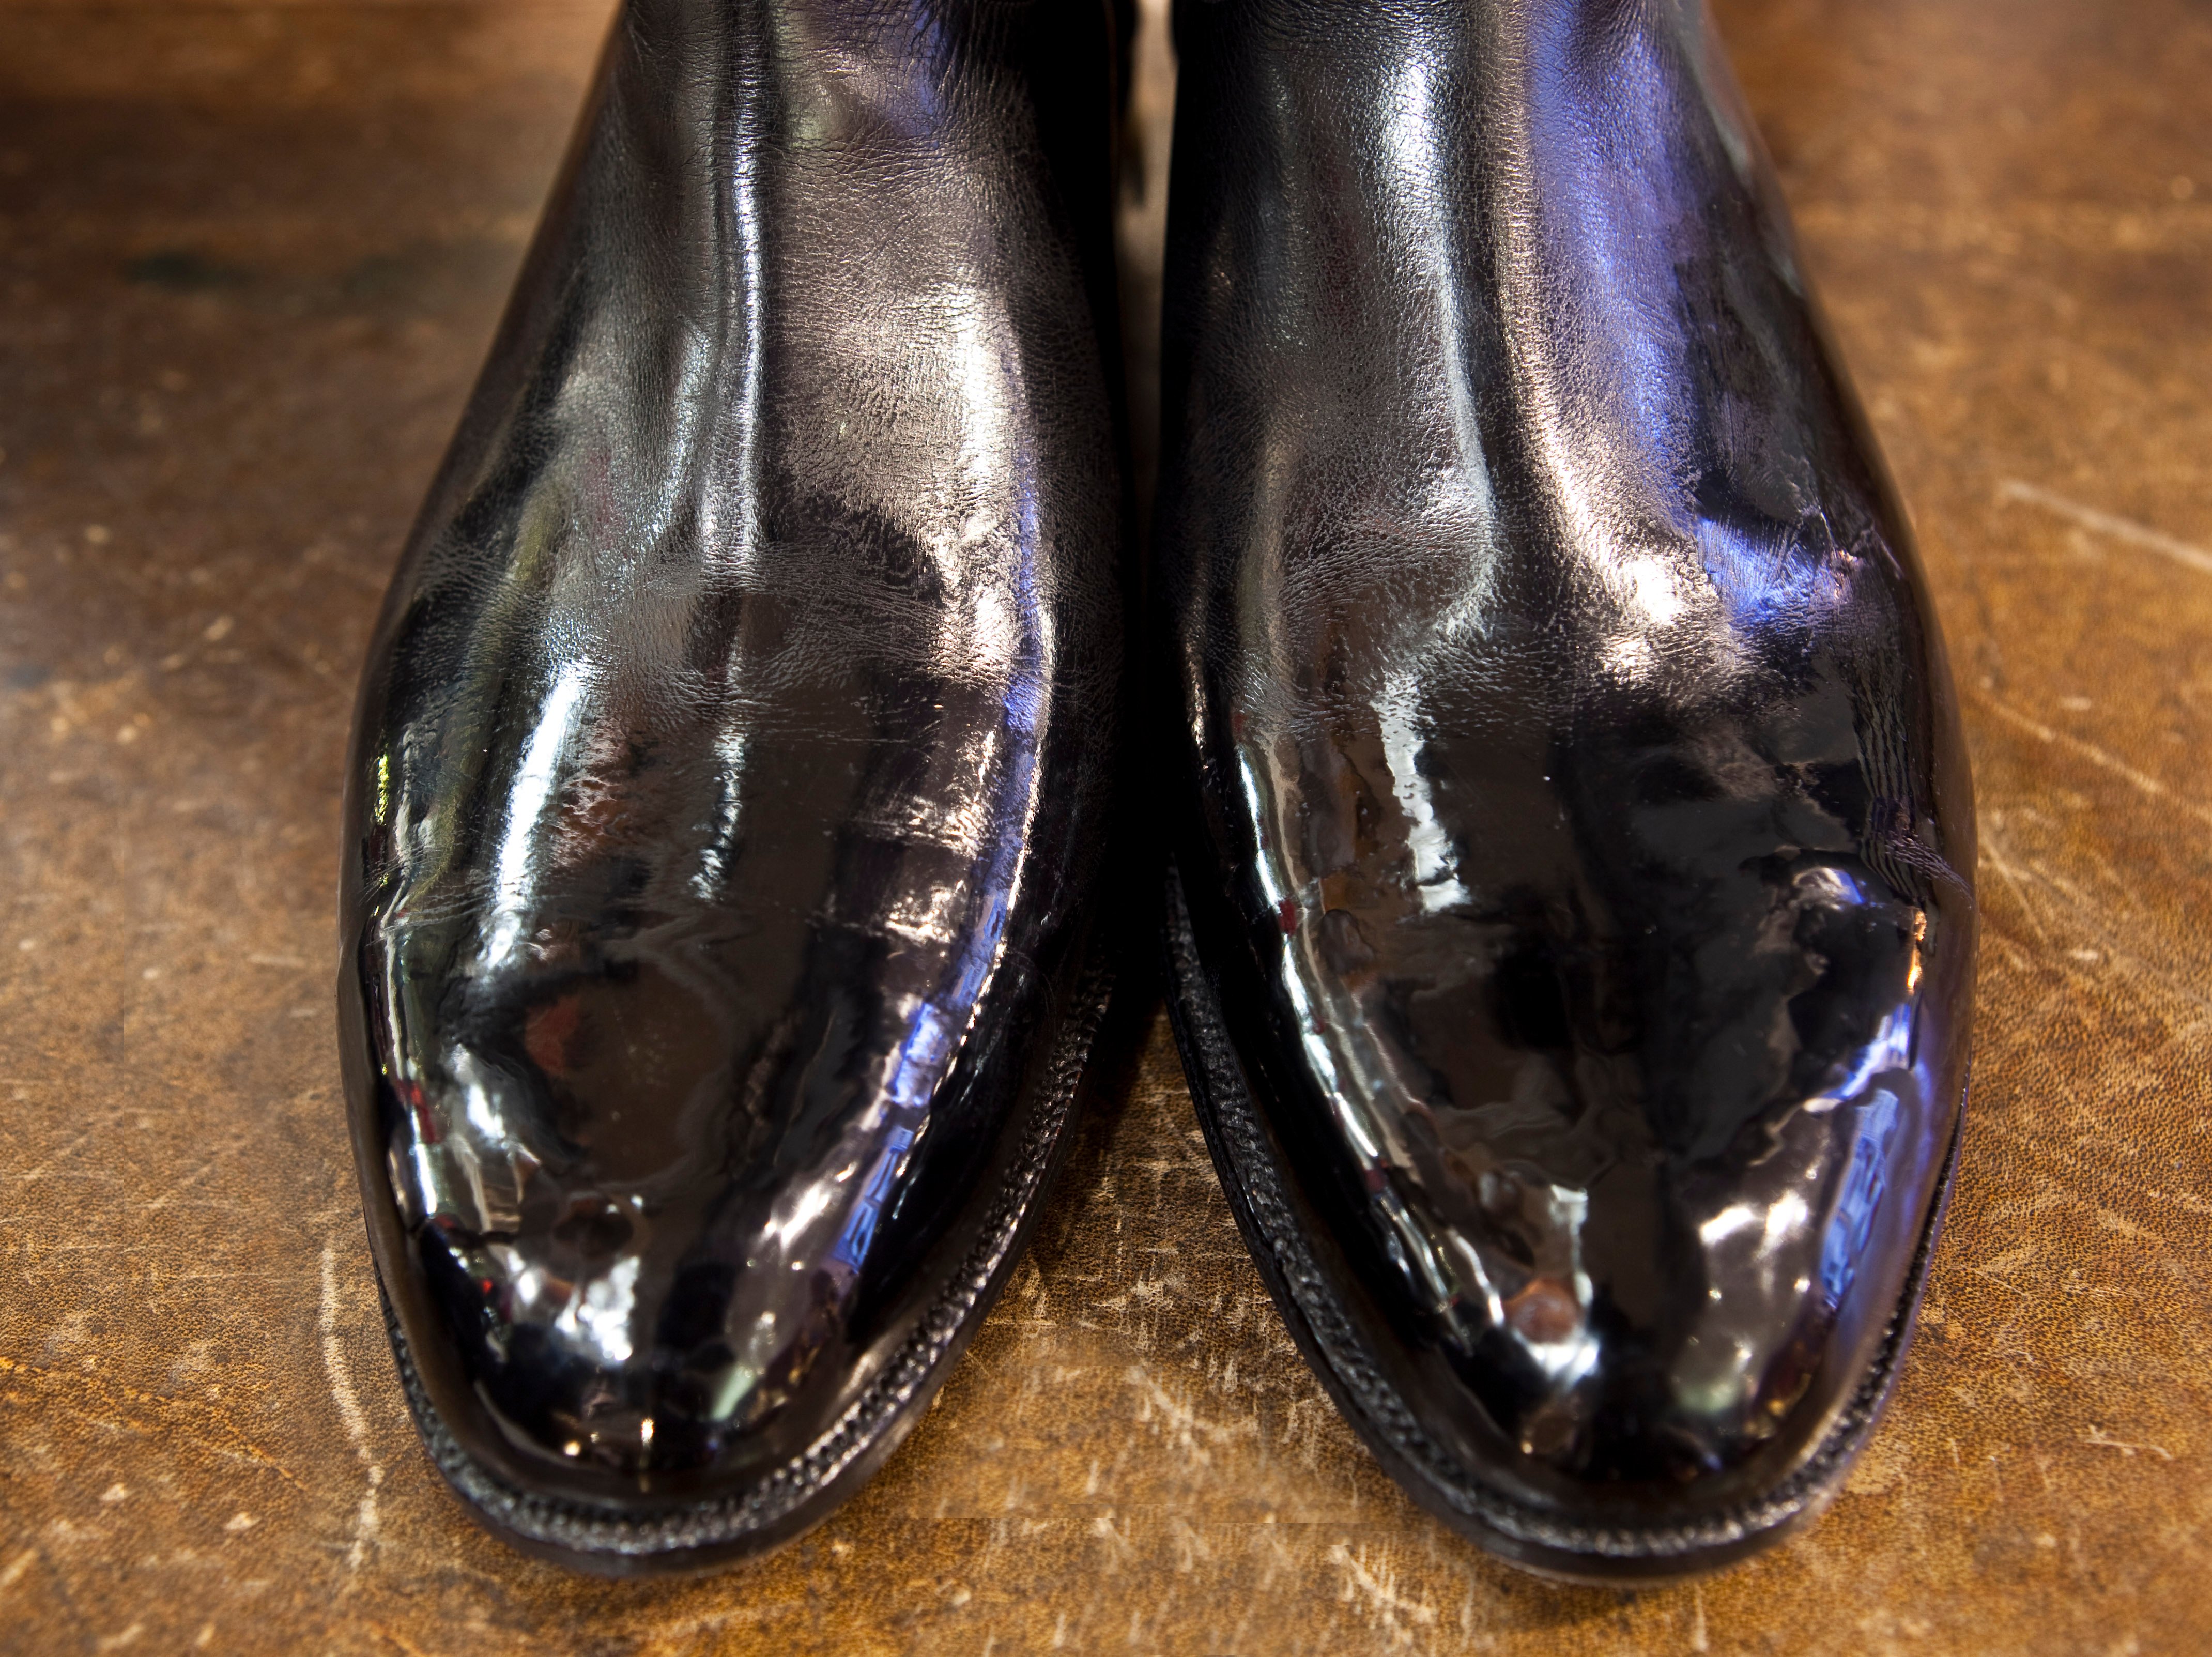 shoe polish tips